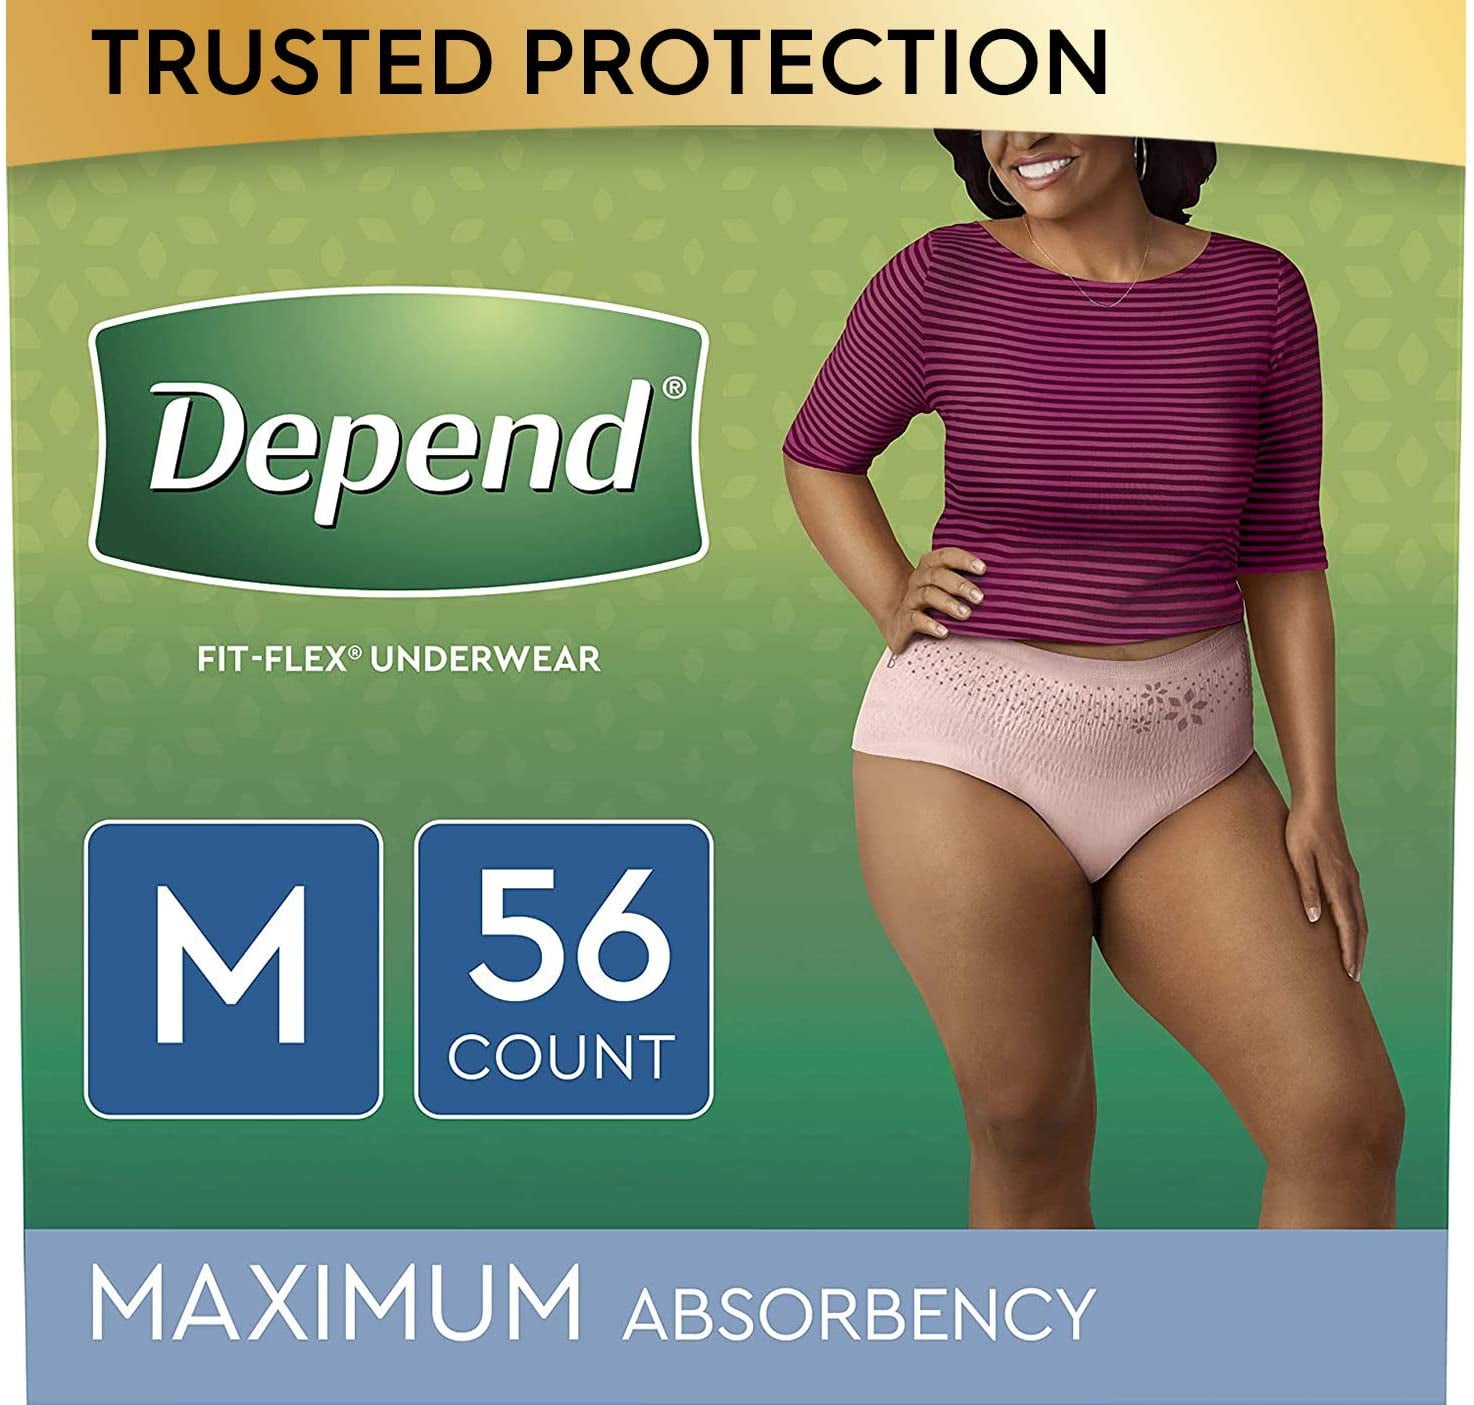 Depend Silhouette Incontinence Postpartum Underwear Medium 56 Count -  Berry, 56 Count - Gerbes Super Markets